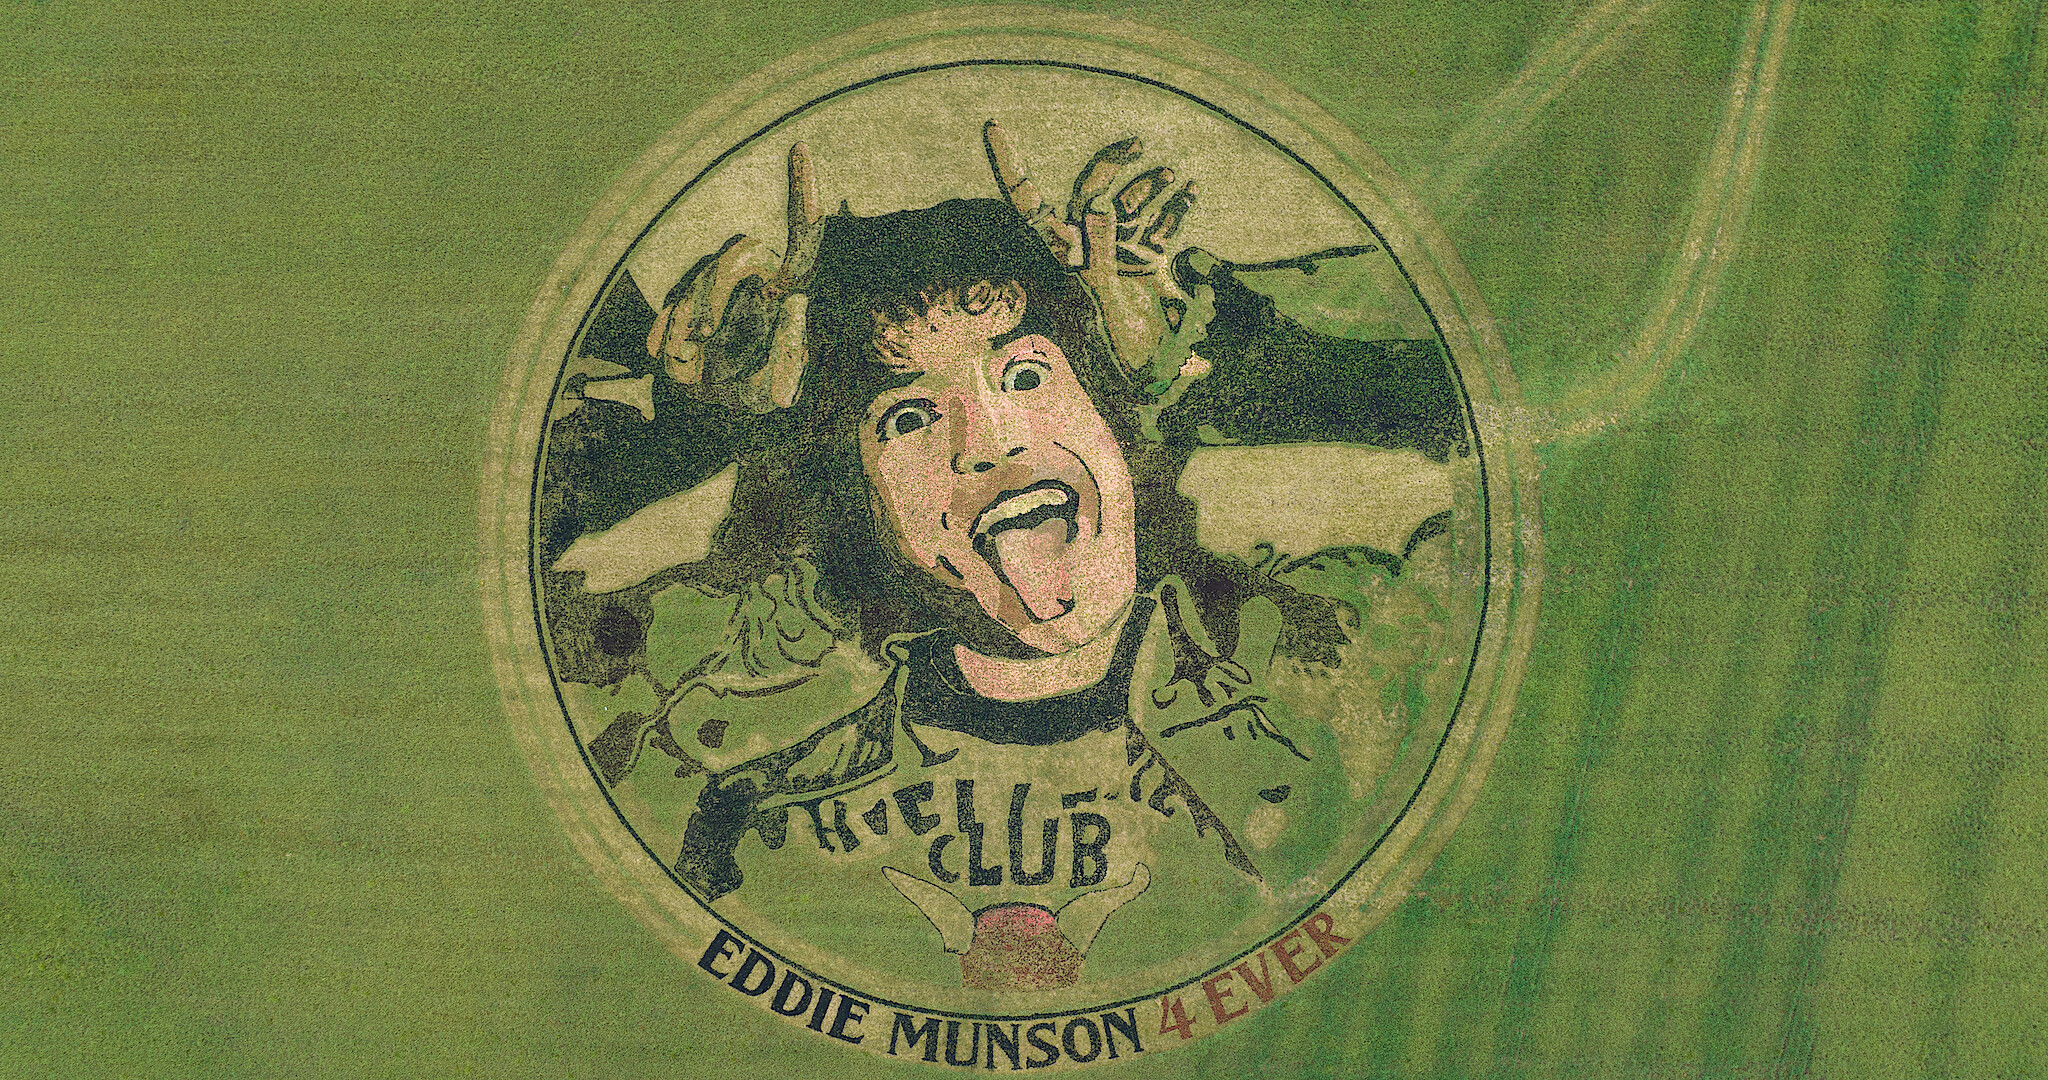 Welcome to the Eddie Munson Era